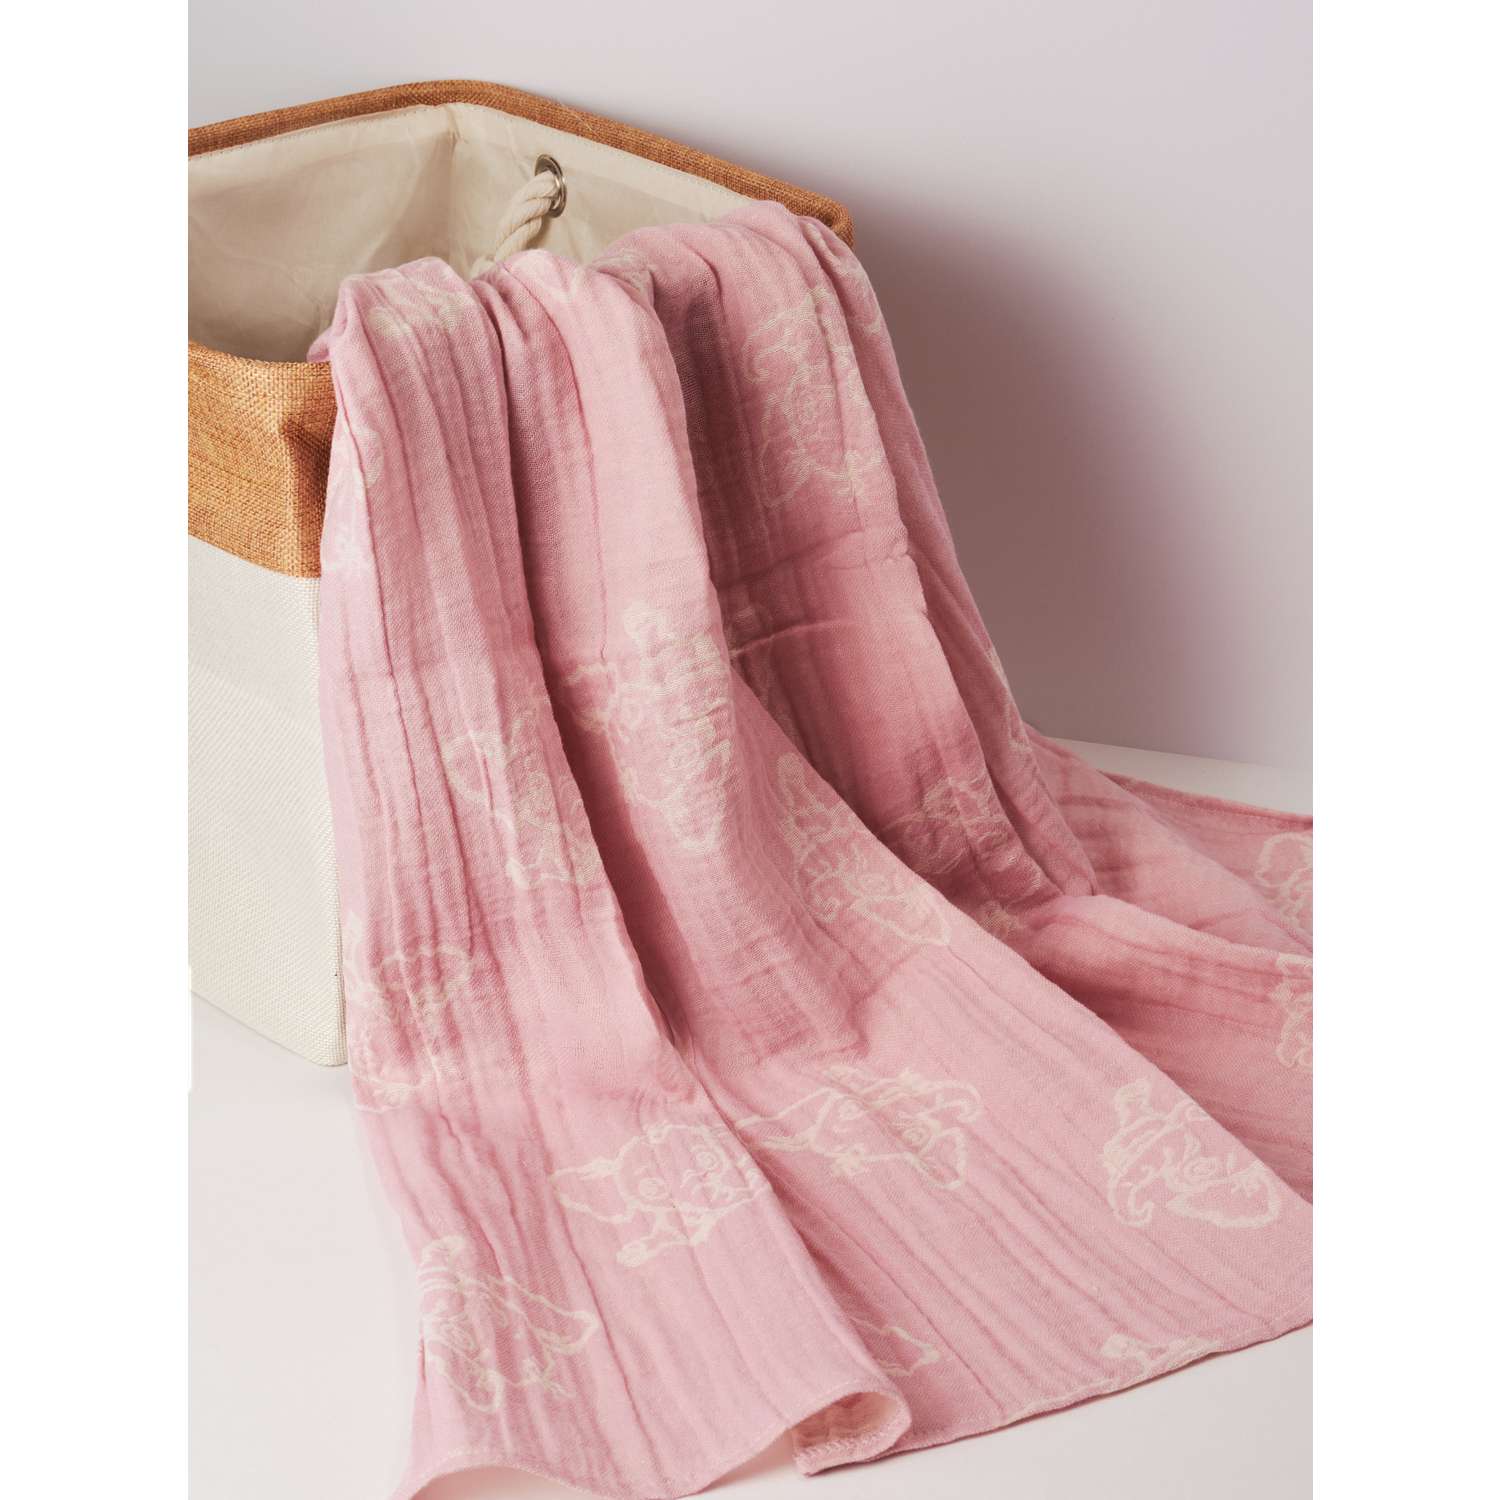 Жаккардовое одеяло Bebekevi двухслойное из муслина розовое - фото 1